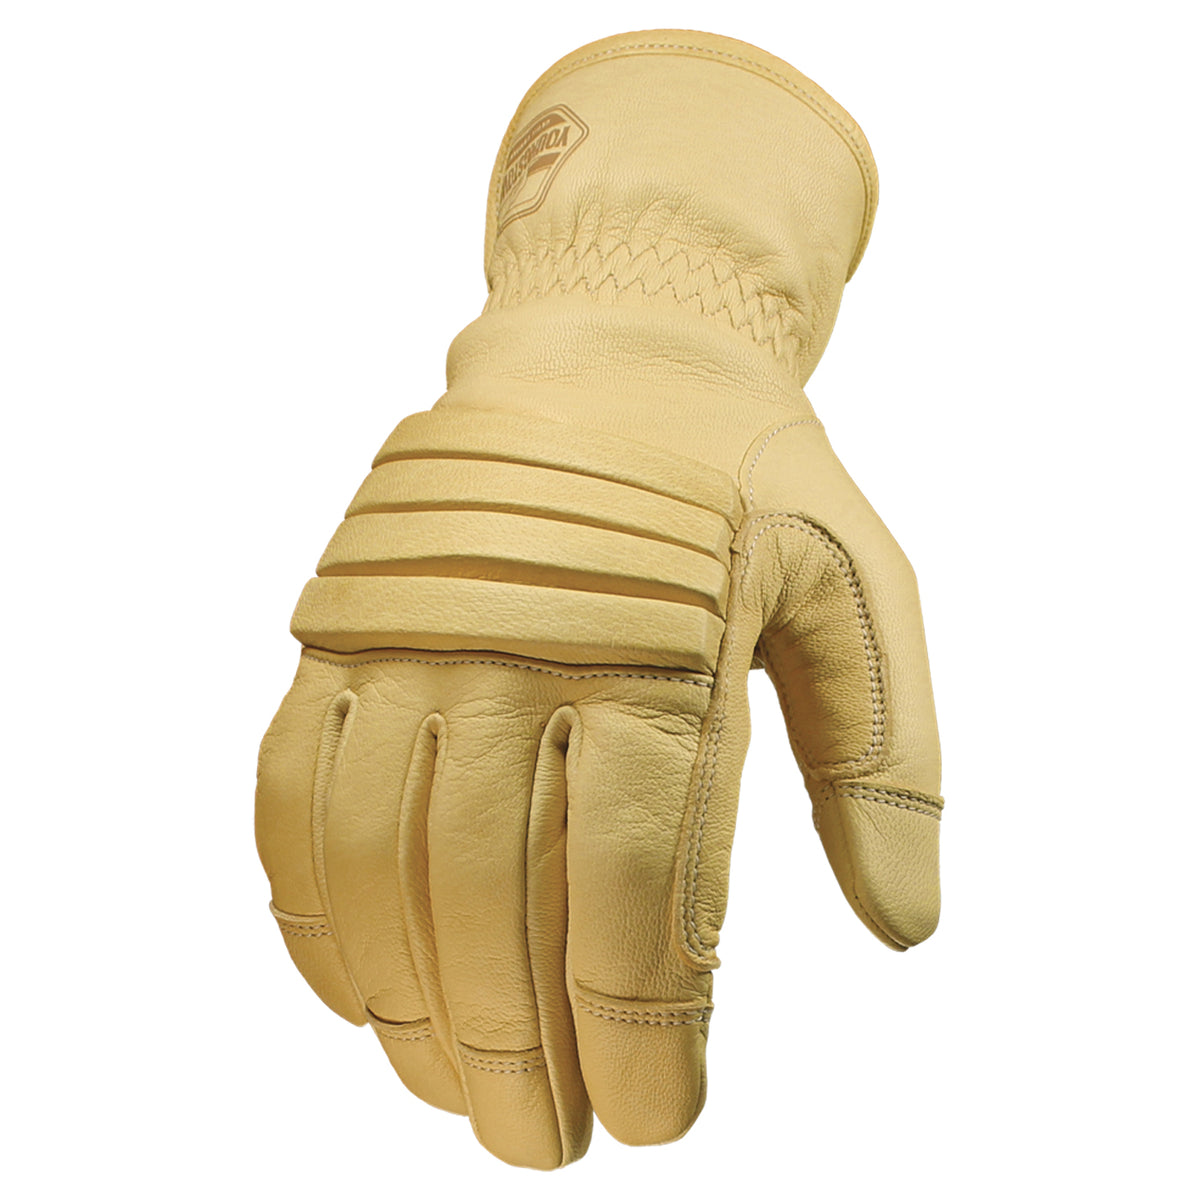 Youngstown Glove Co Mechanics Gloves,Leather,Blk/Tan,L,PR 12-3270-80-L